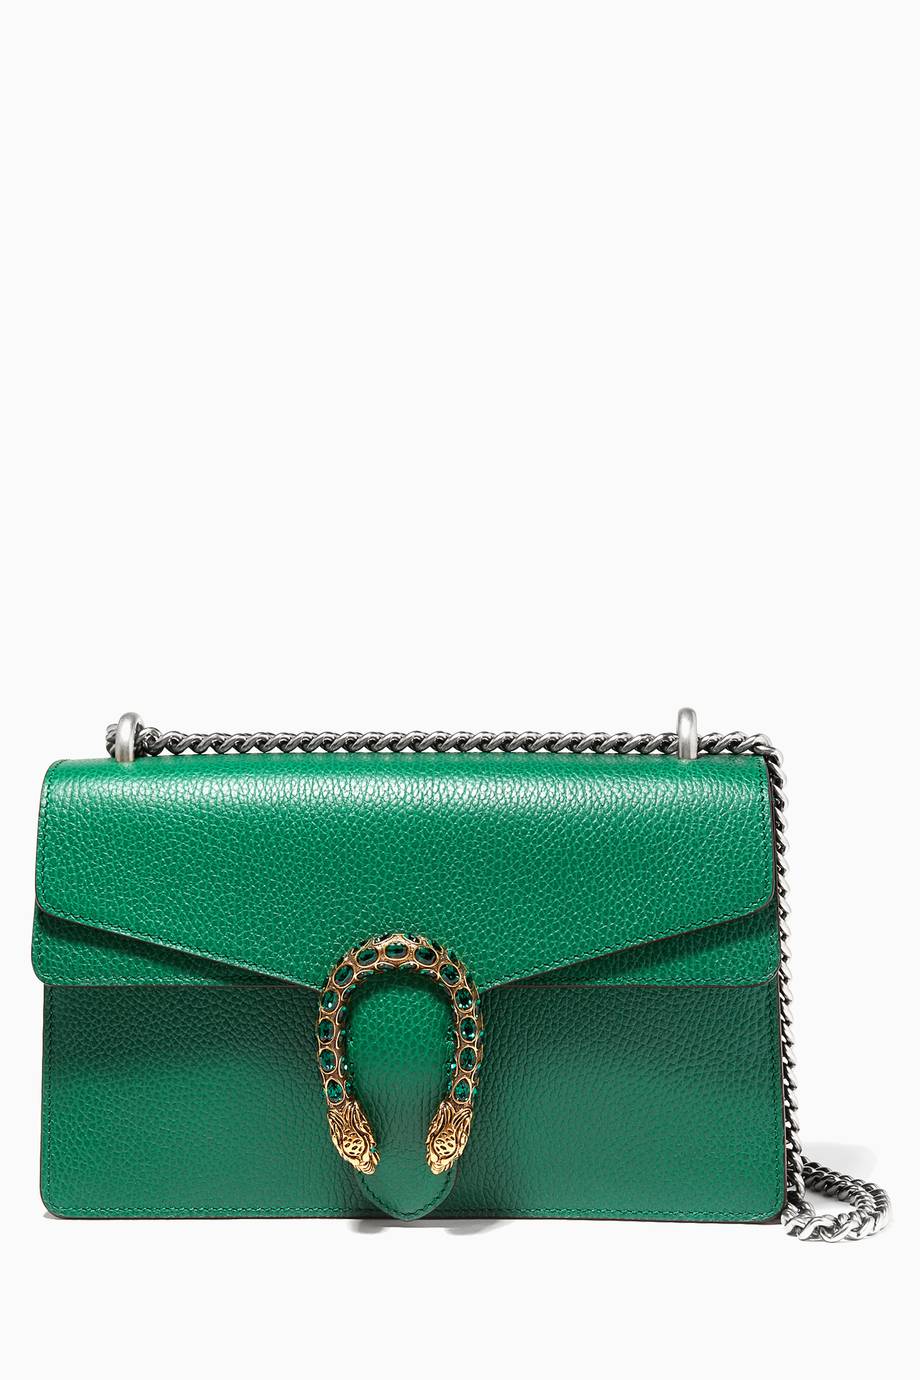 Shop Luxury Gucci Green Dionysus Textured Leather Shoulder Bag | Ounass UAE